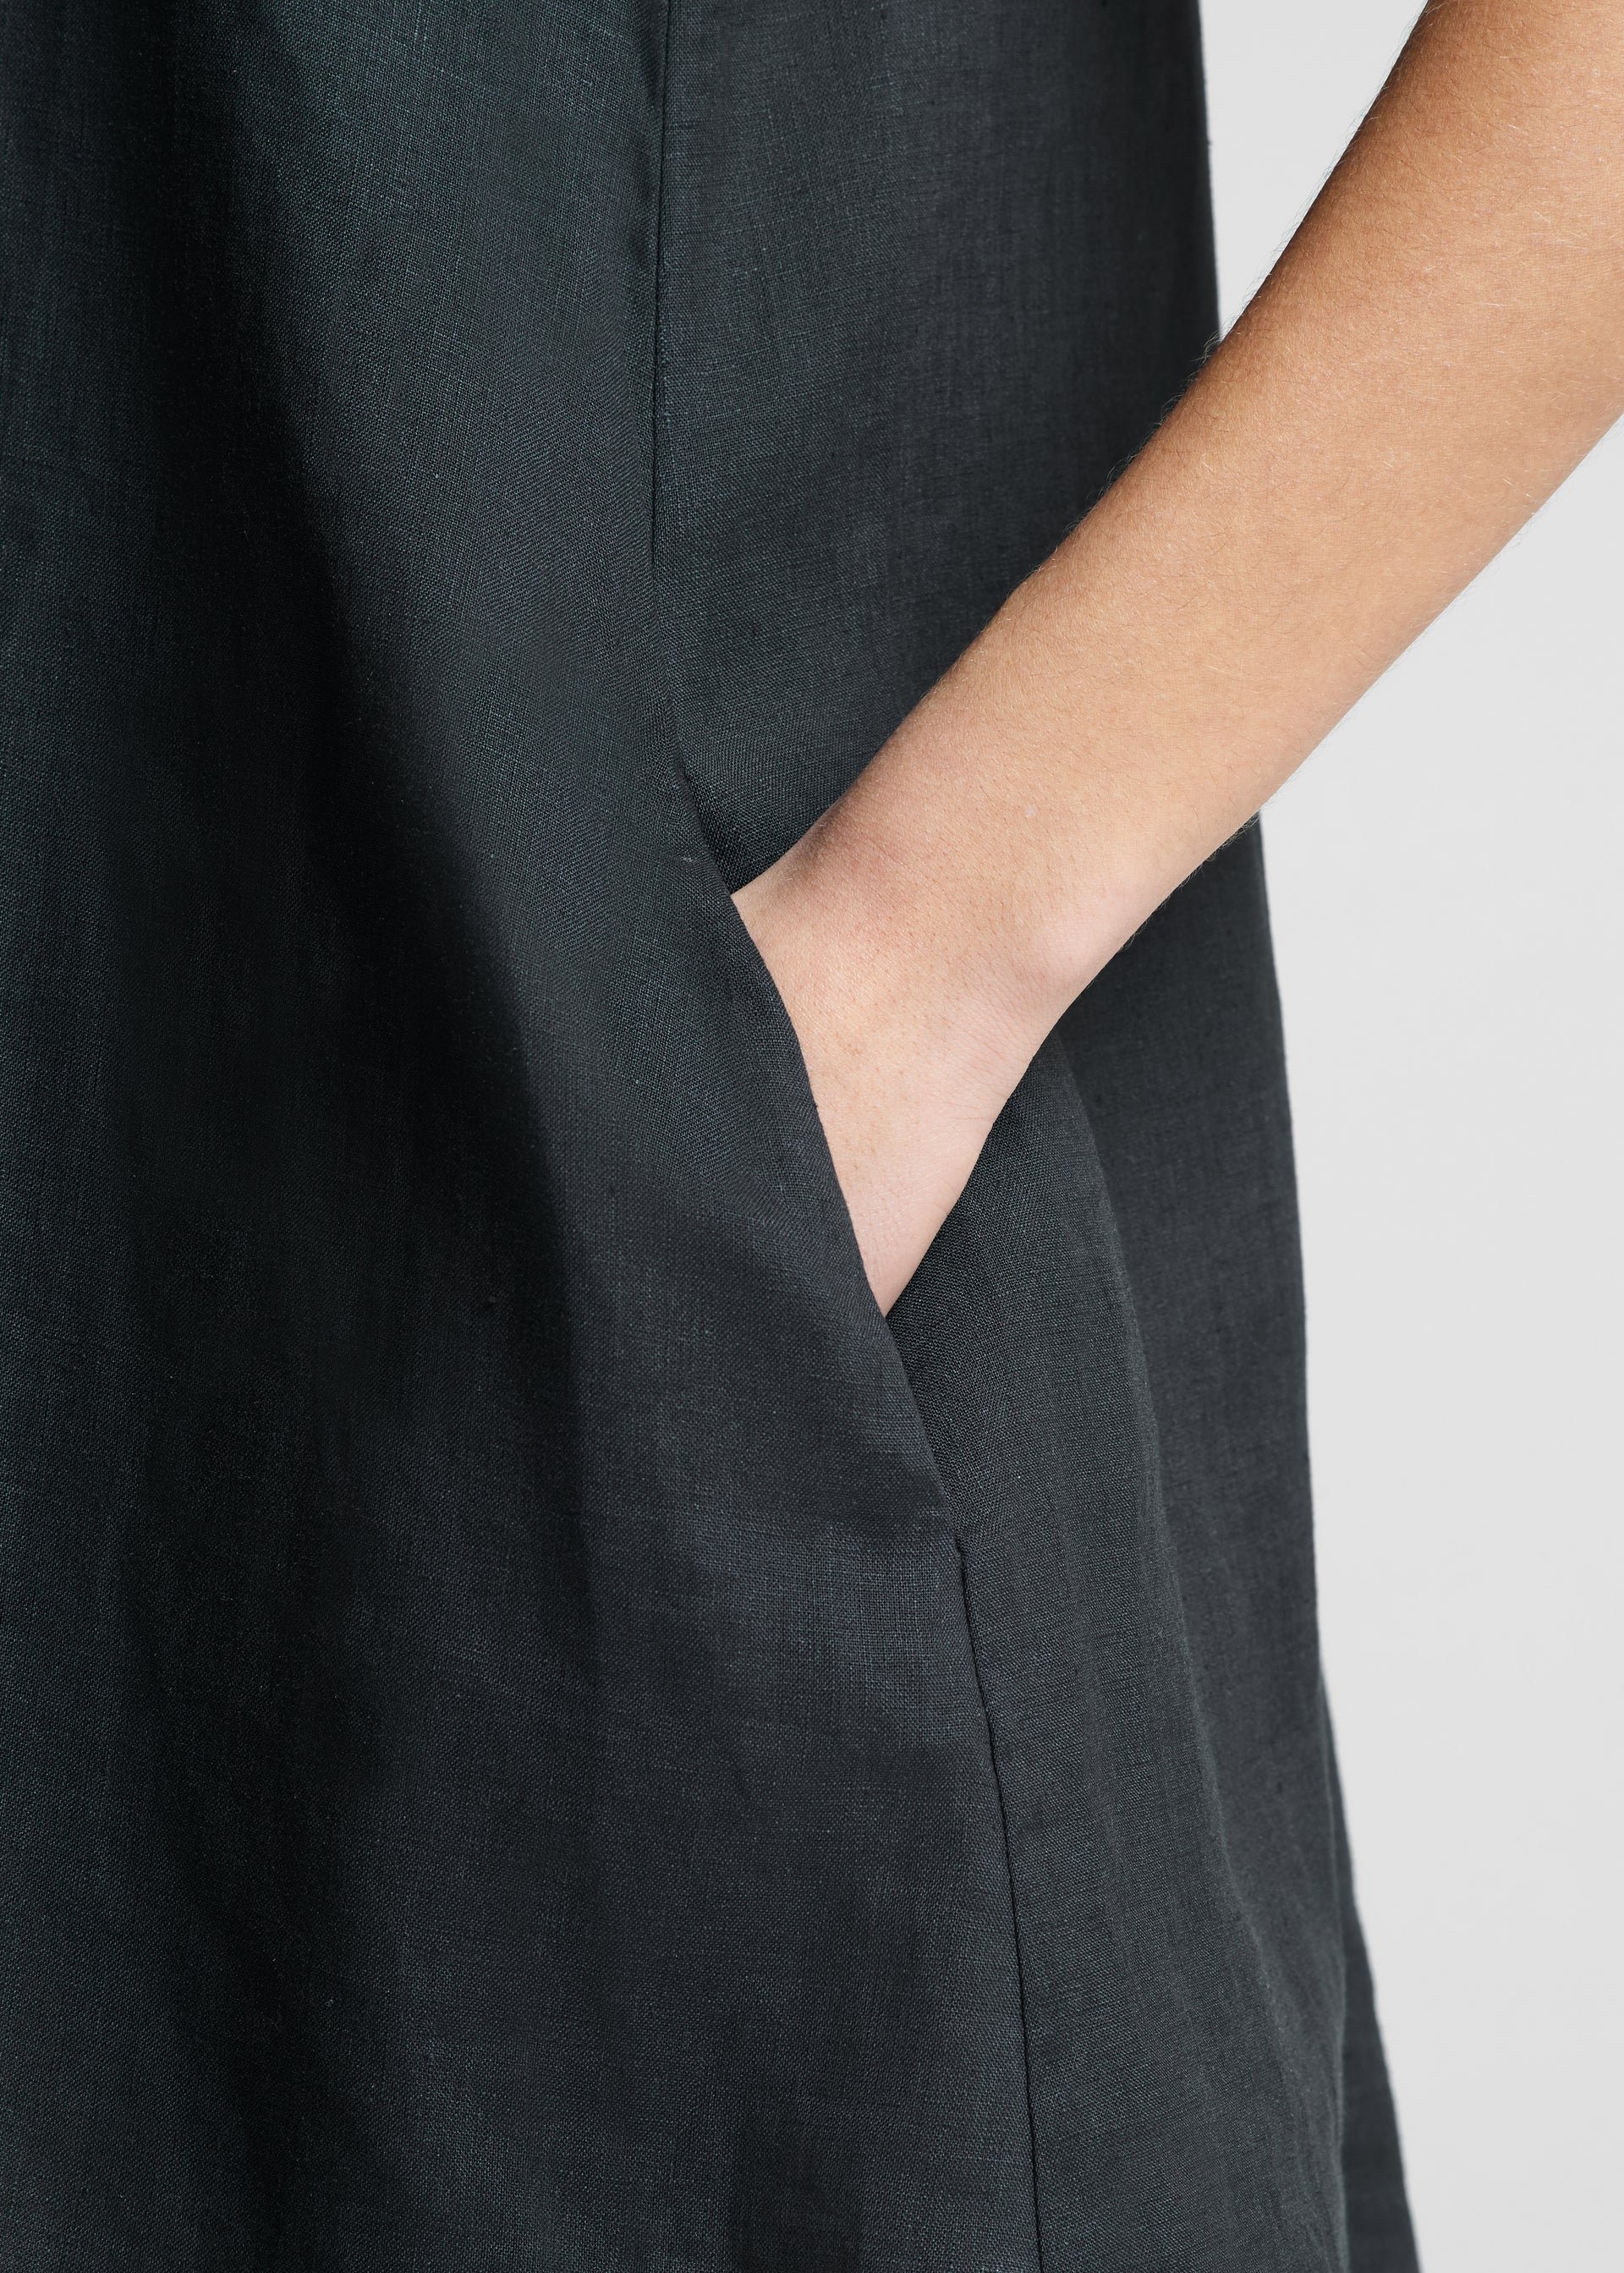 Amalfi Skirt Black Organic Linen